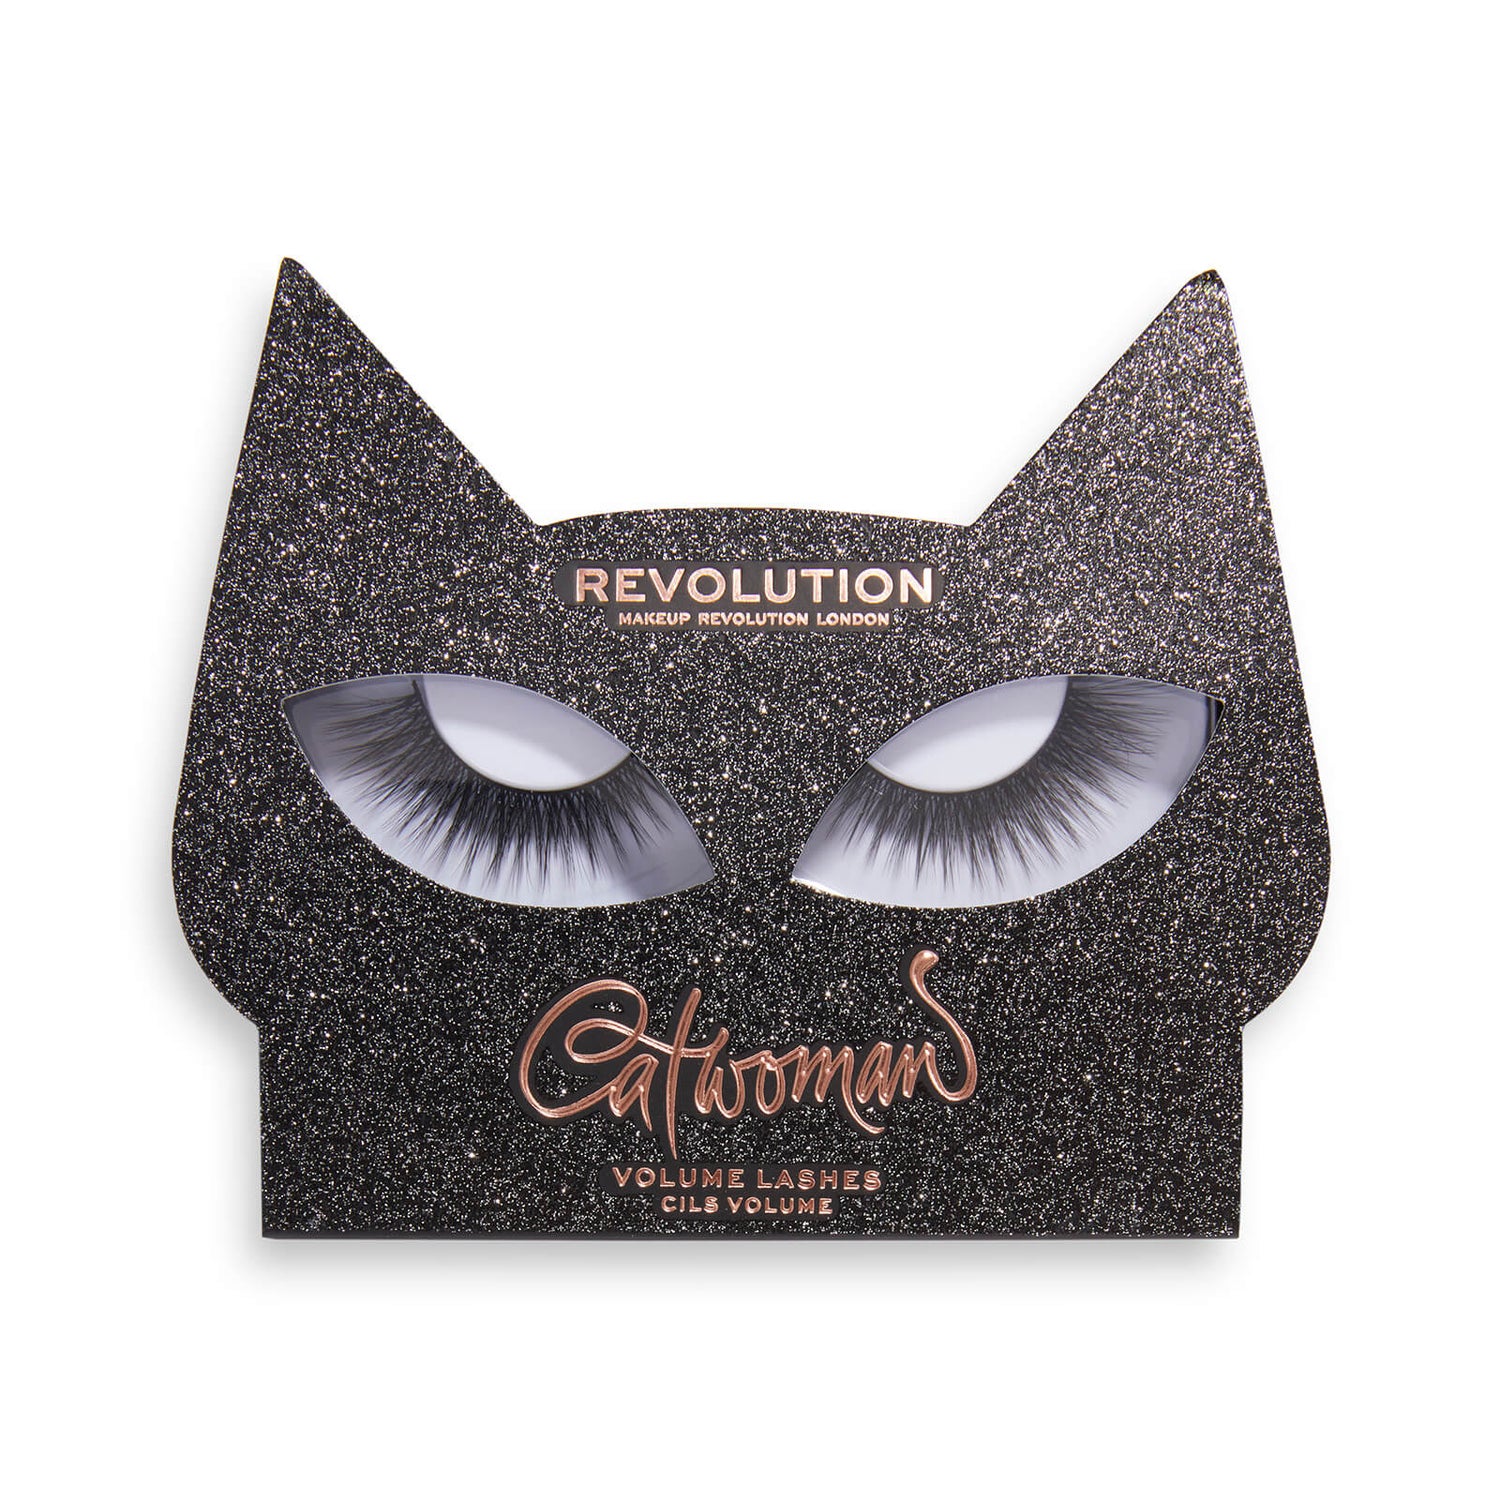 Cils Makeup Revolution X Catwomen